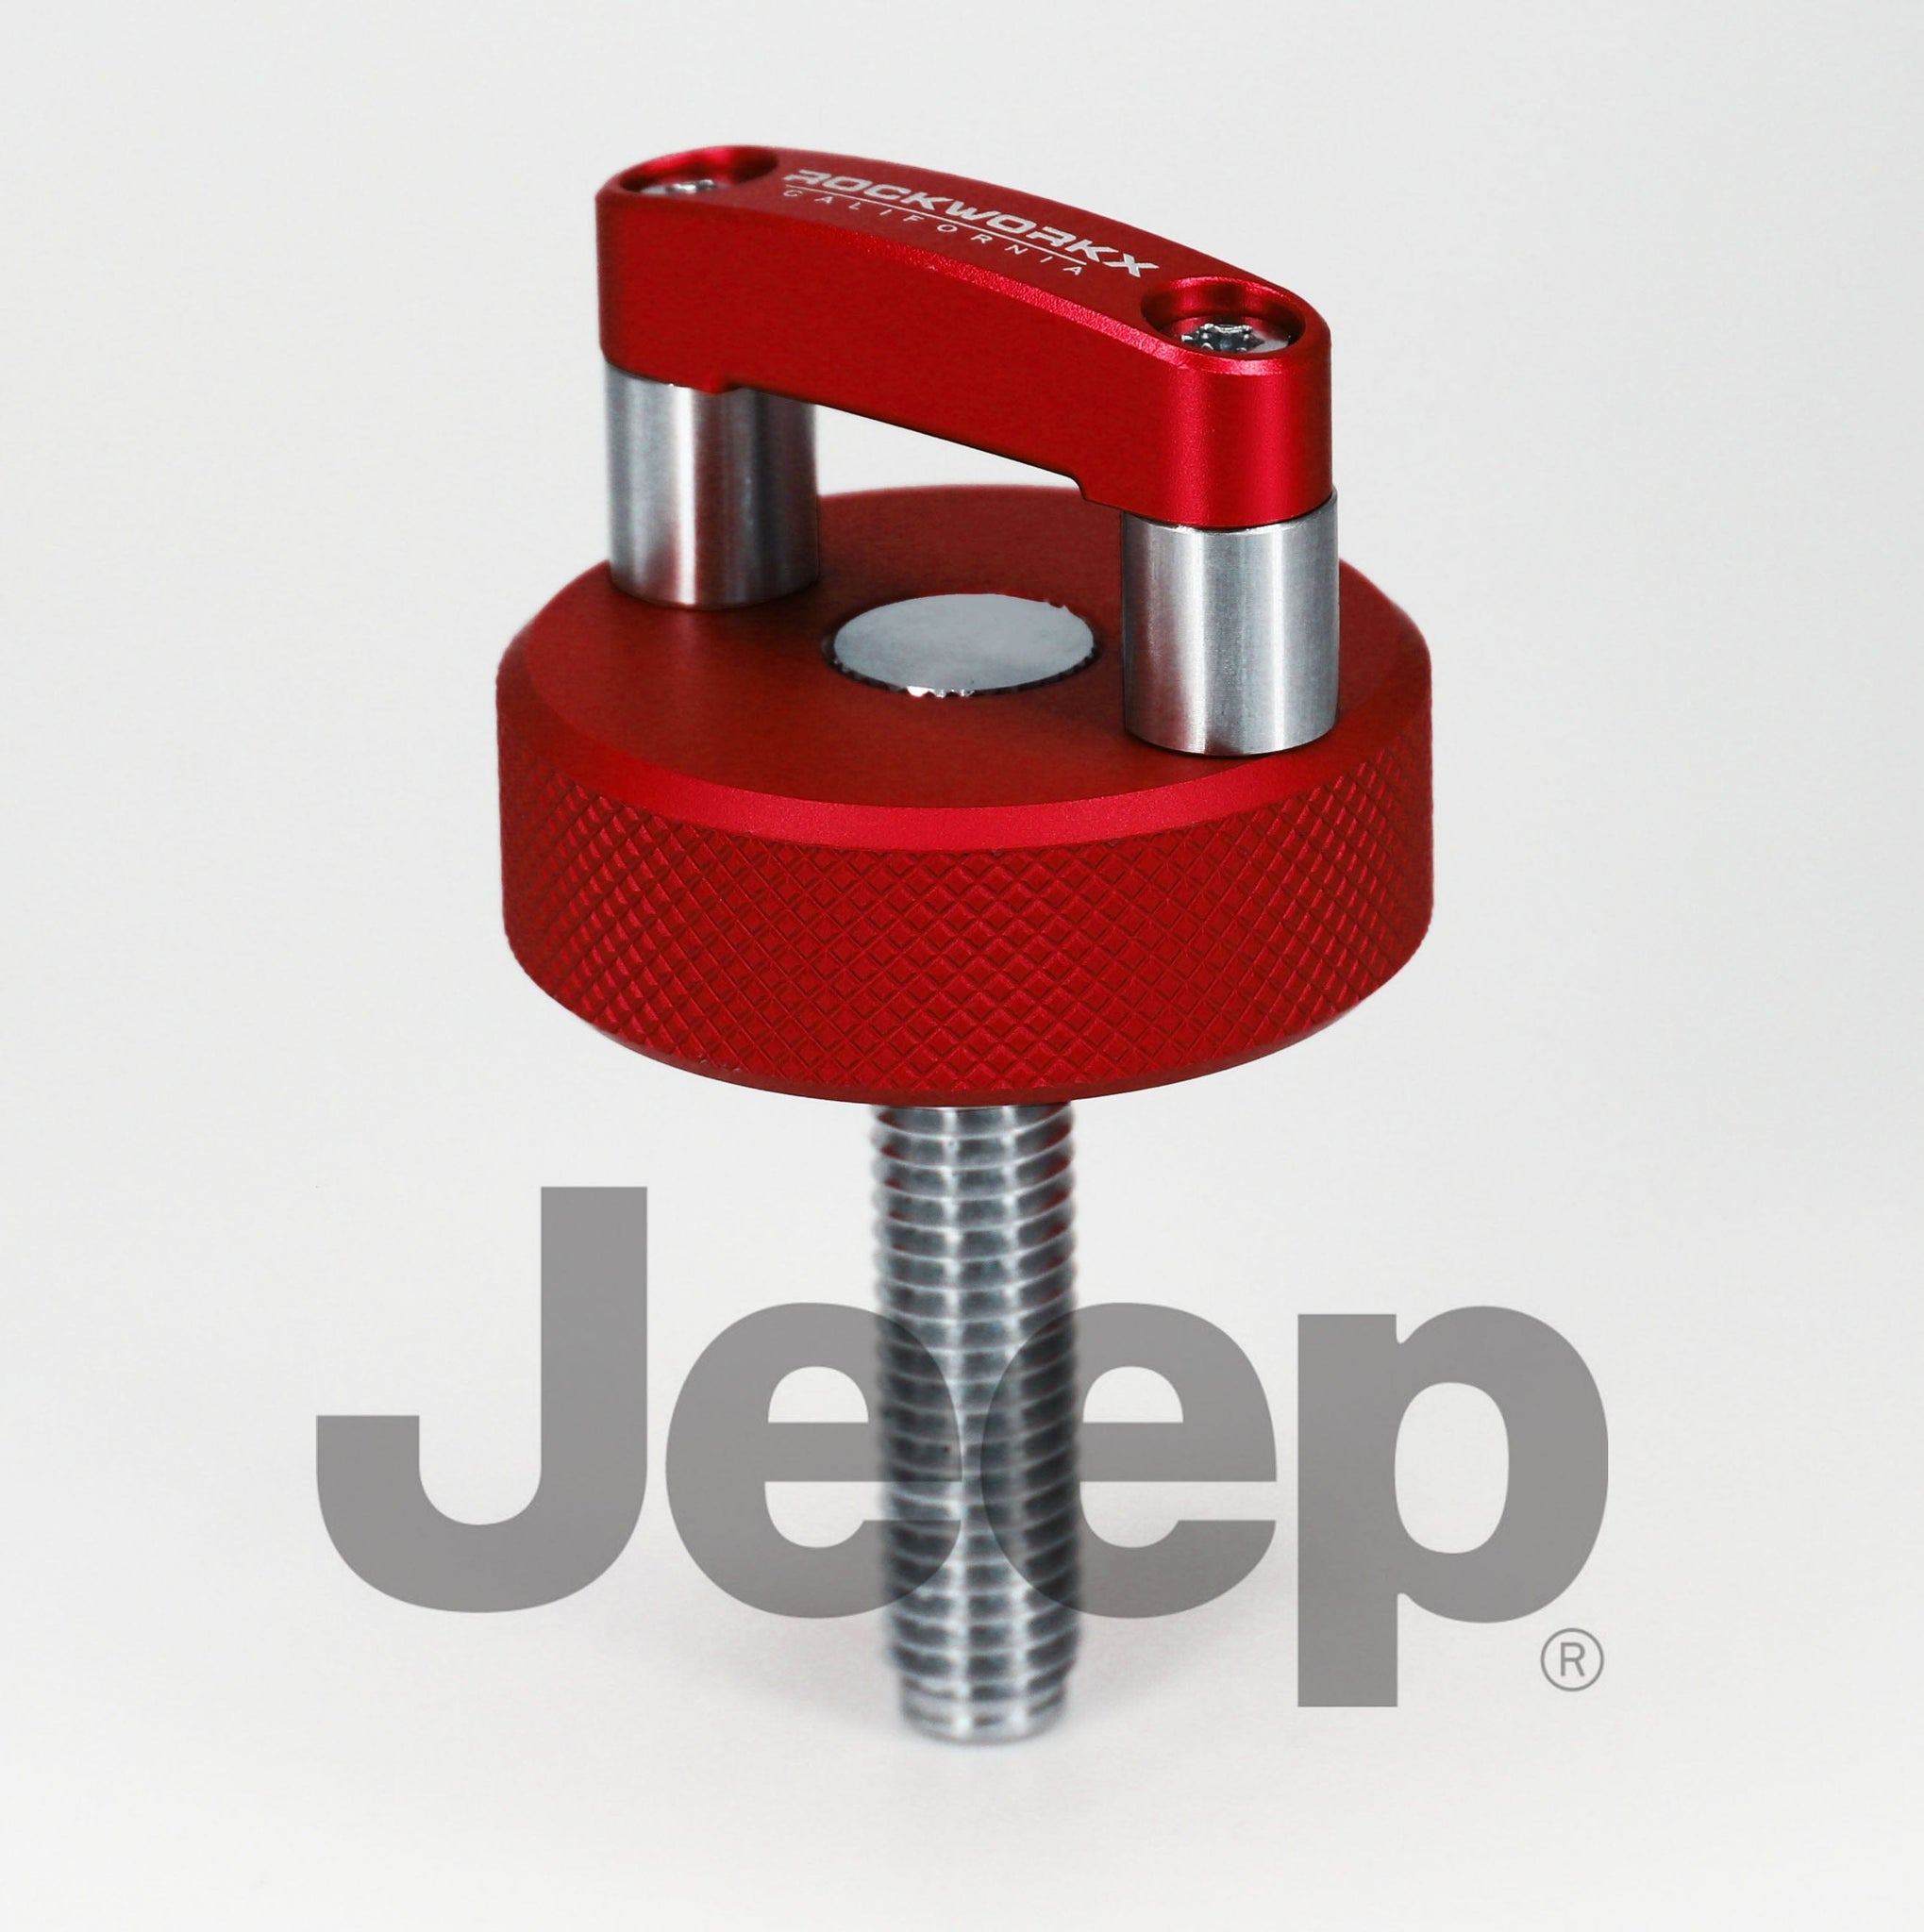 JEEP Wrangler CJ, YJ, & TL/LJ Hard Top Quick Removal Fastener Thumb Screws, integrated D Ring, ROCKWORKX Billet Aluminum (Six Piece Set) rockworkx